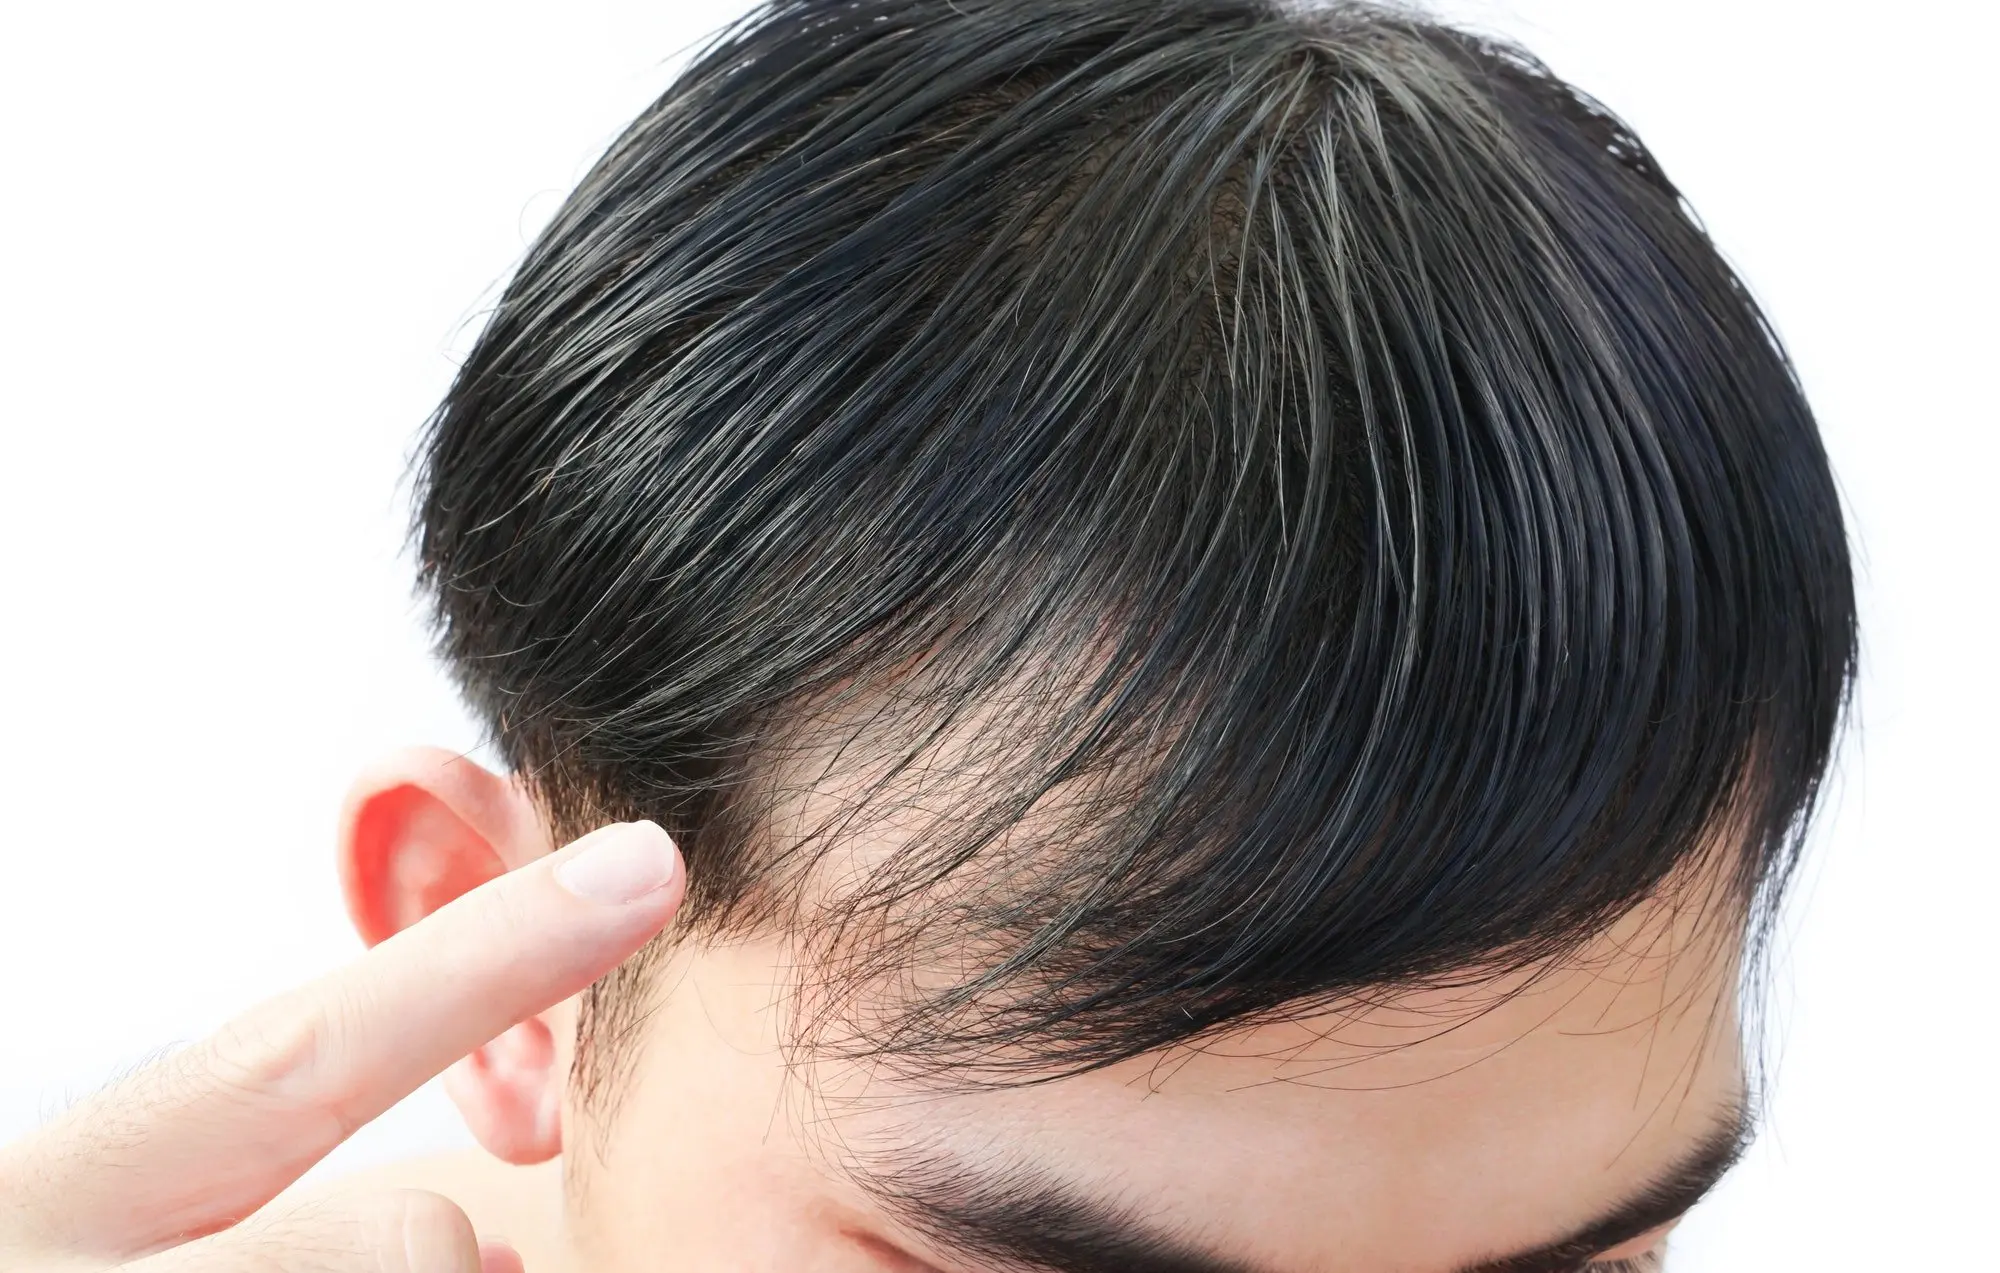 Hair loss - effluvium or alopecia?